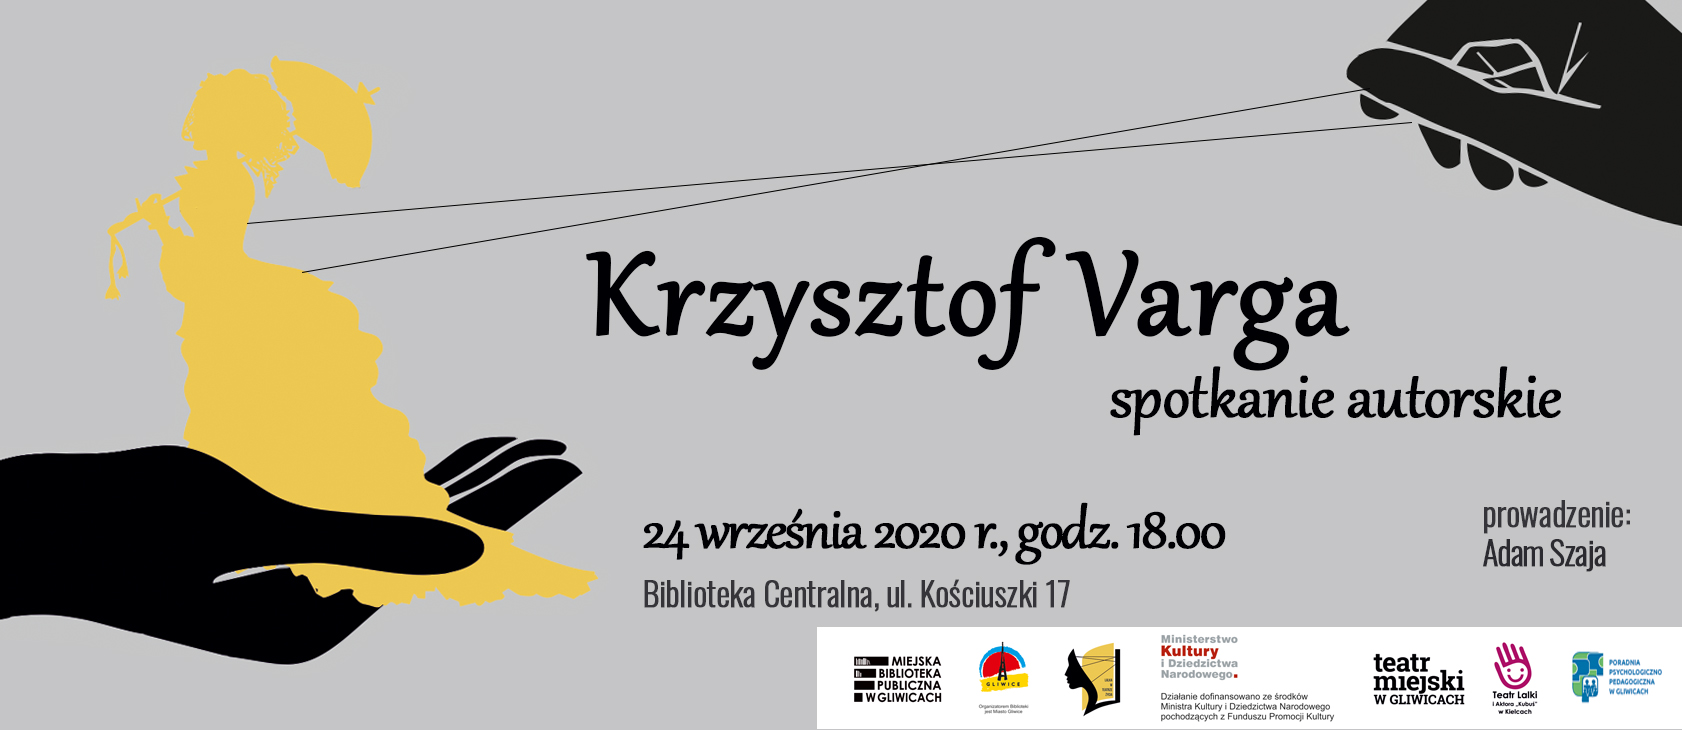 Krzysztof Varga - spotkanie autorskie